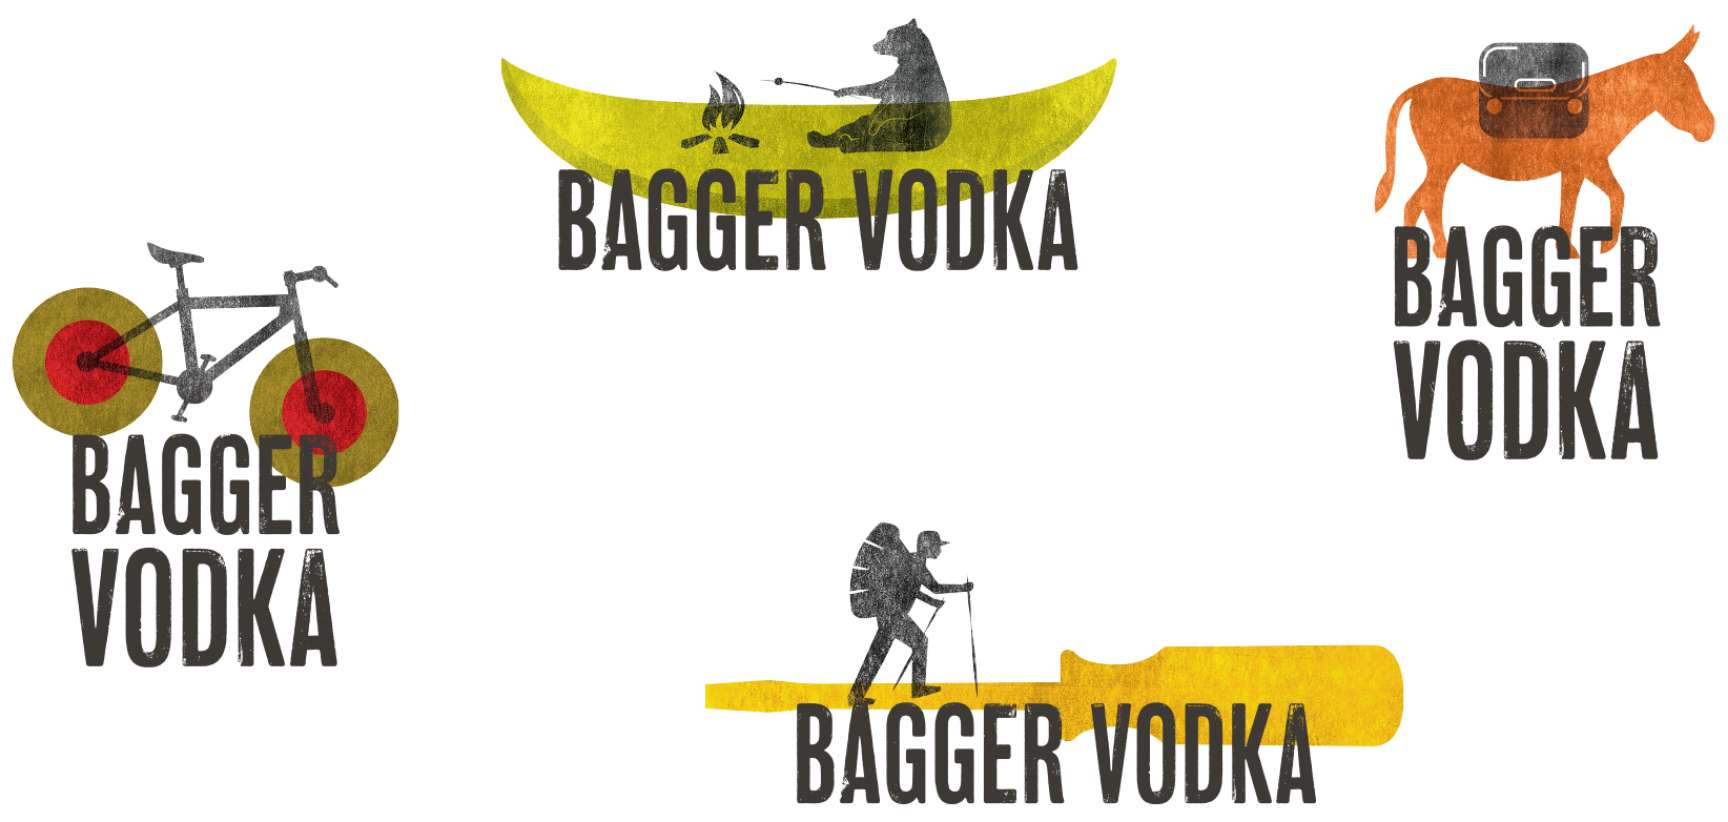 Bagger Vodka stickers